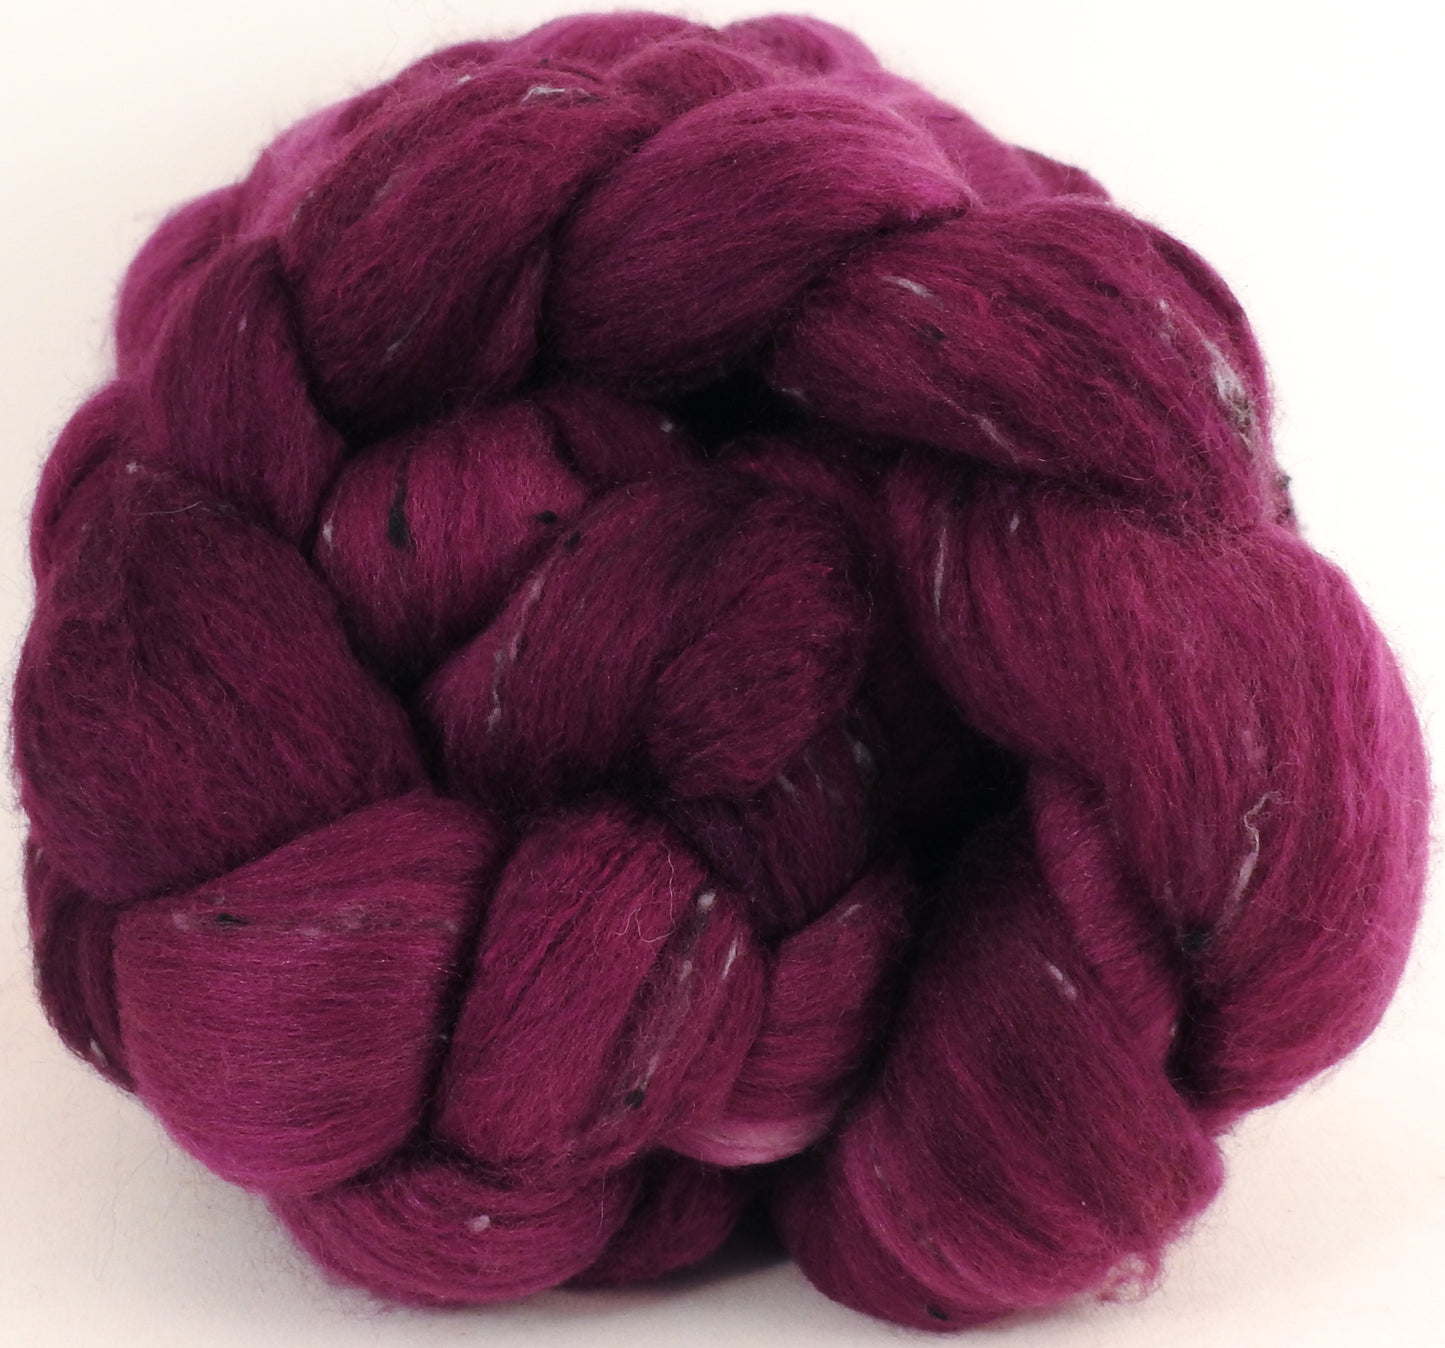 Batt in a Braid #49 -Mulberry- Polwarth/ Mulberry Silk/ Tweed Blend (50/25/25) - Inglenook Fibers